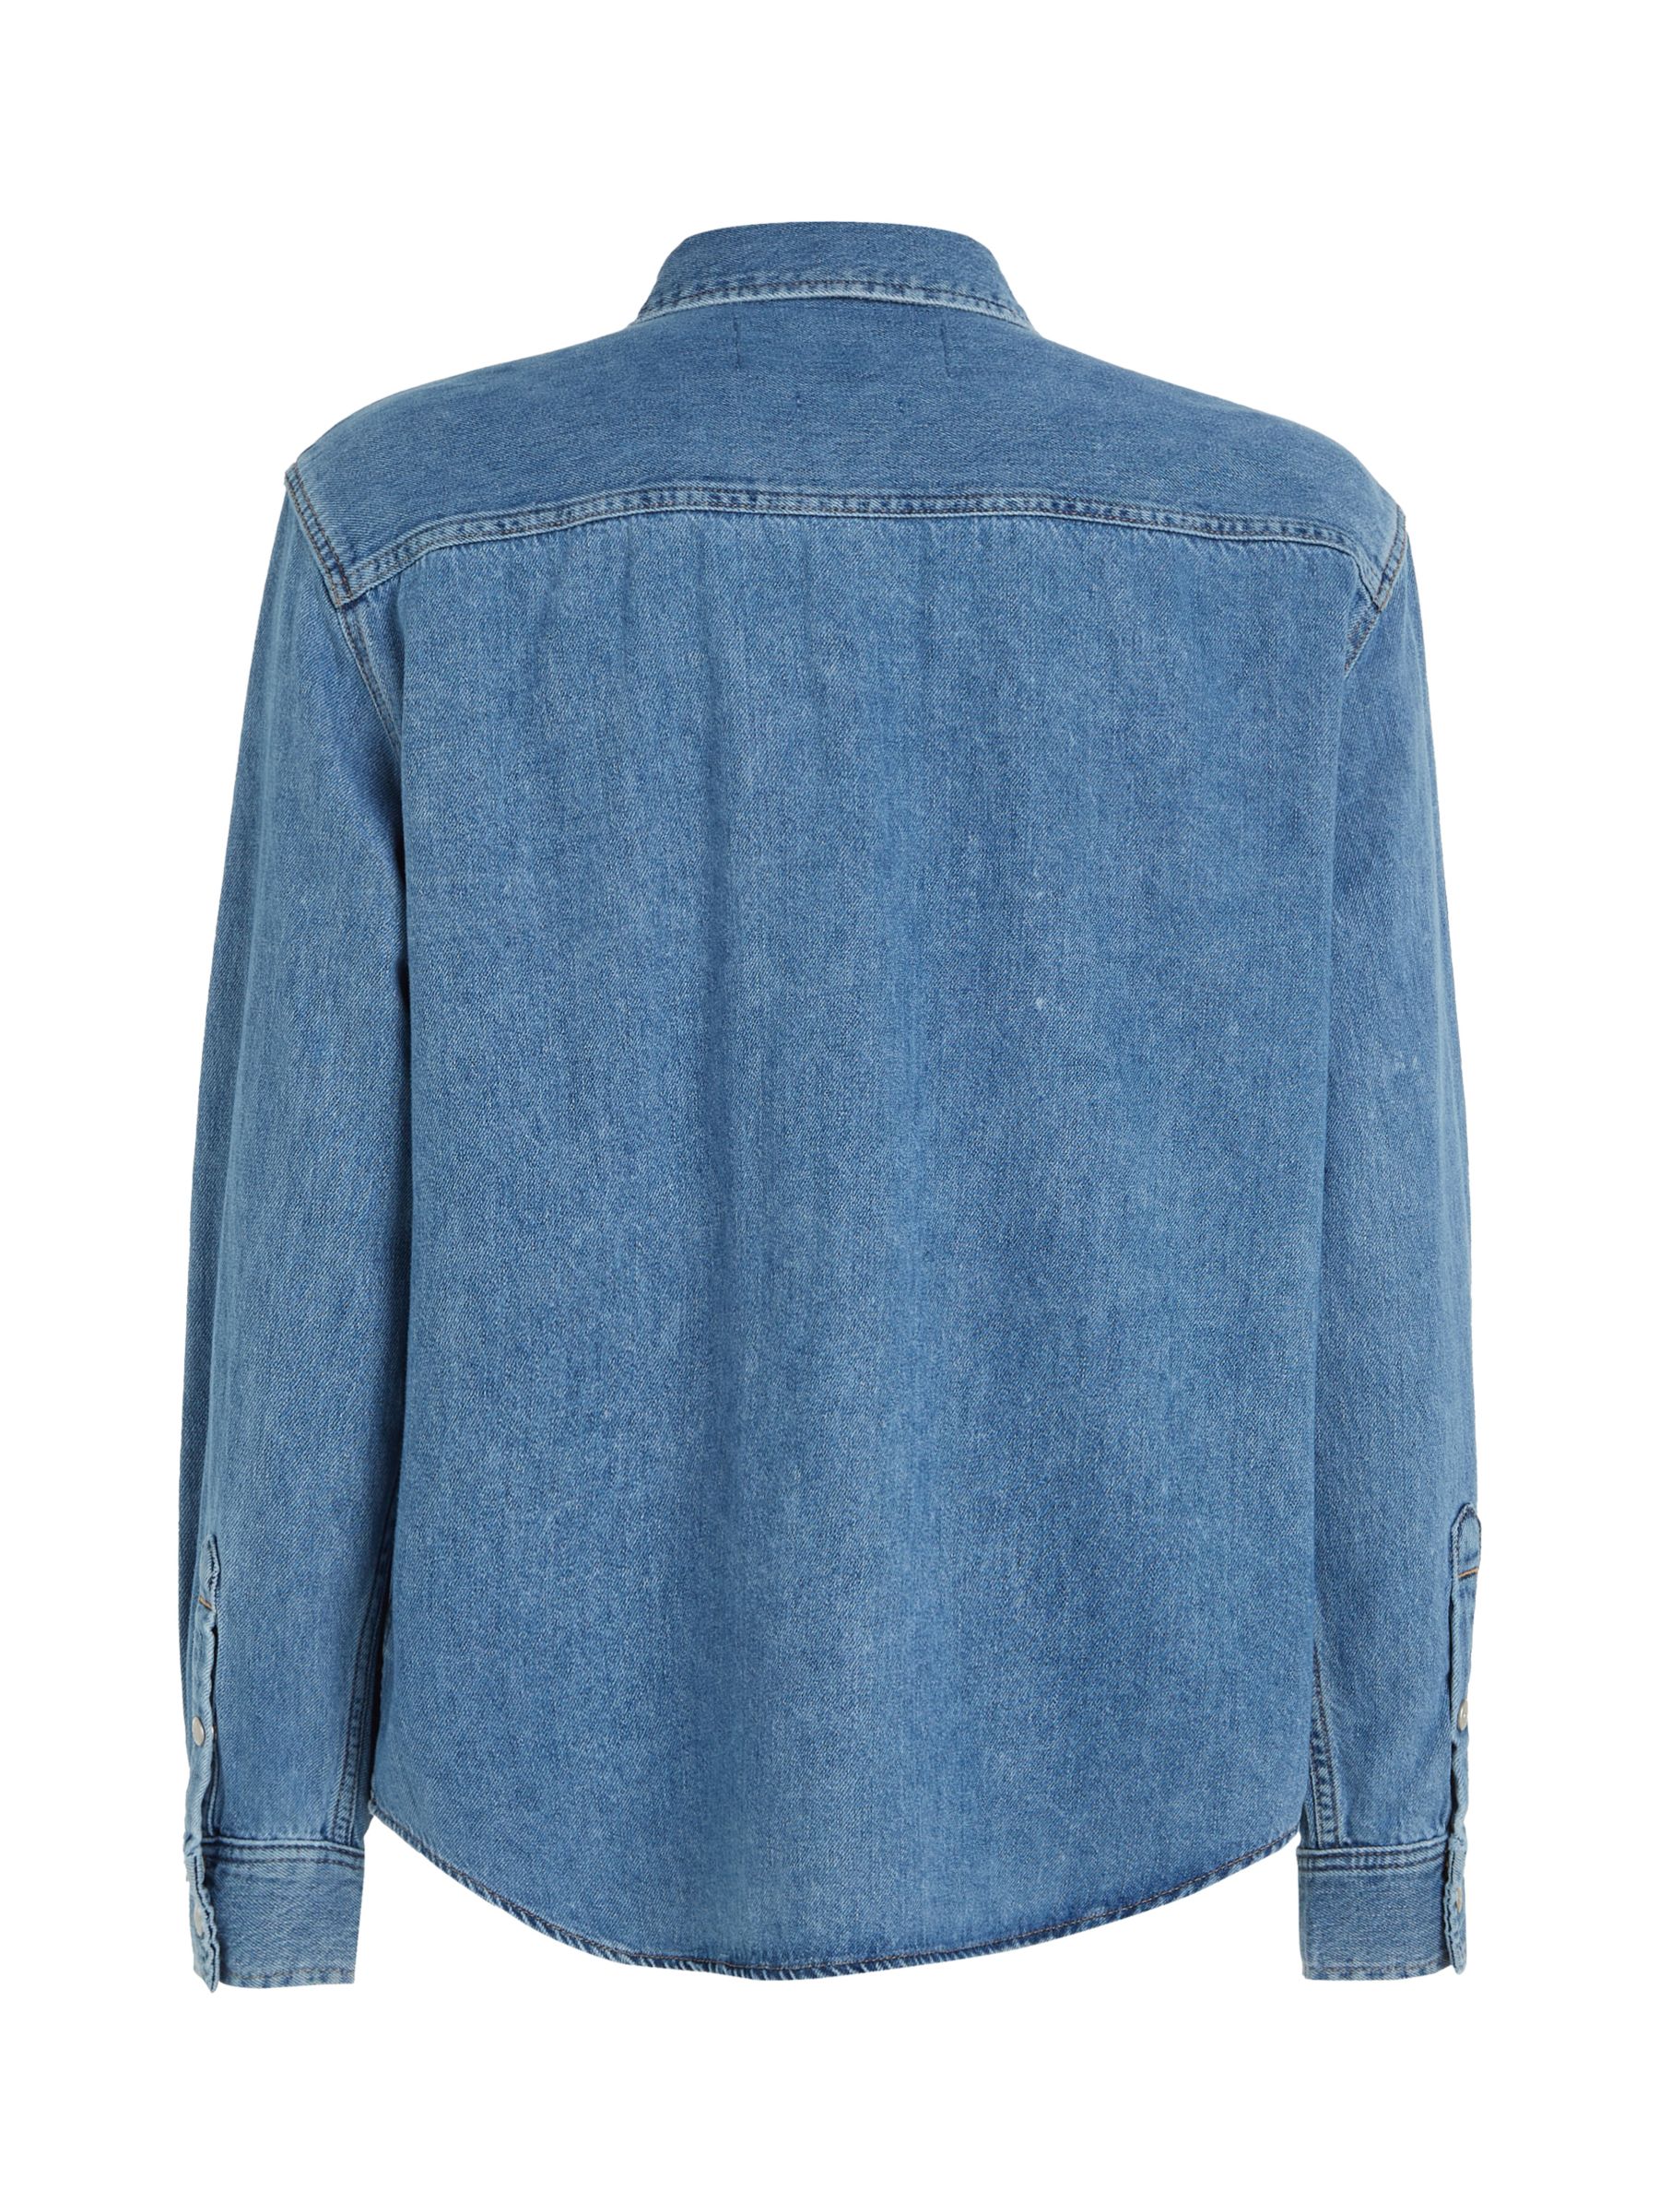 Calvin Klein Jeans Relaxed Denim Shirt, Denim Blue at John Lewis & Partners